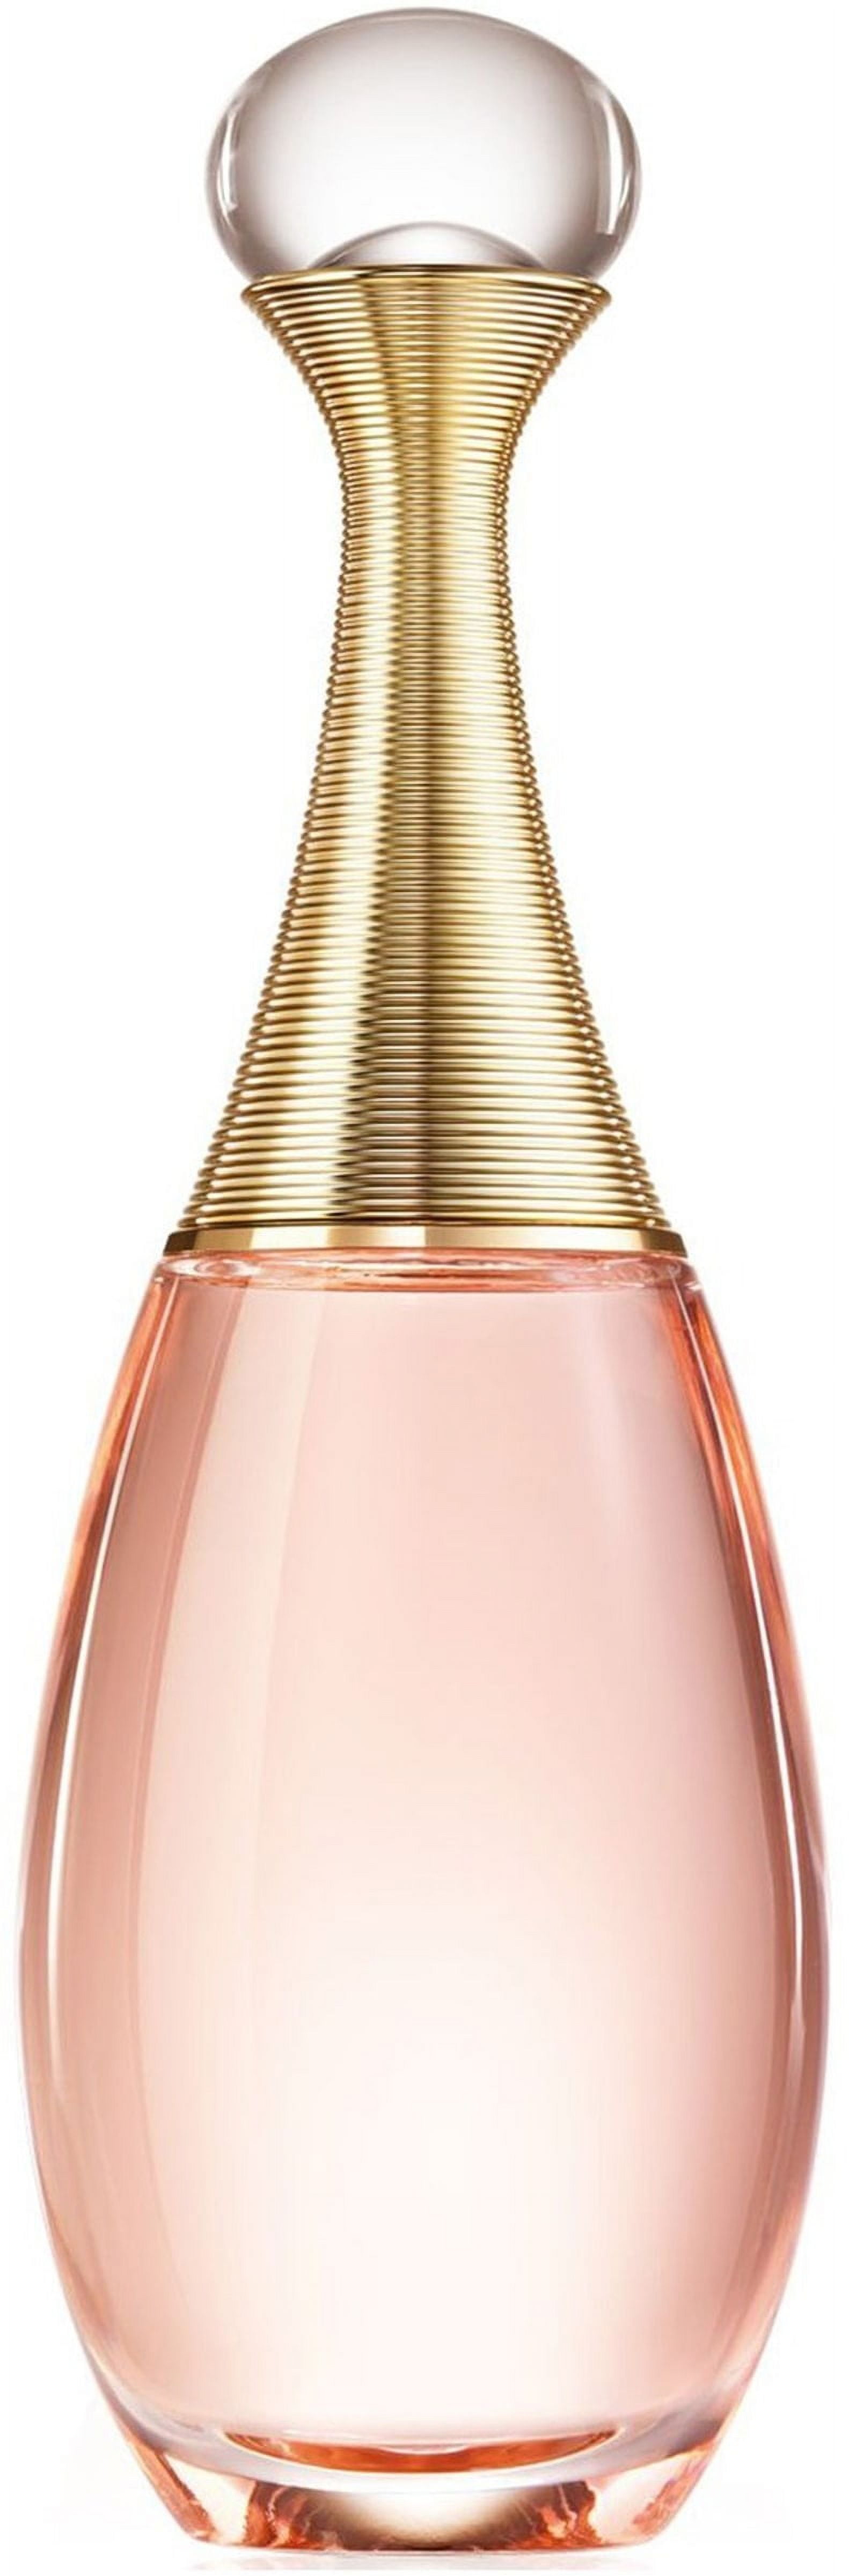 J'adore Eau de Parfum - Women's Perfume Holiday Gift Set